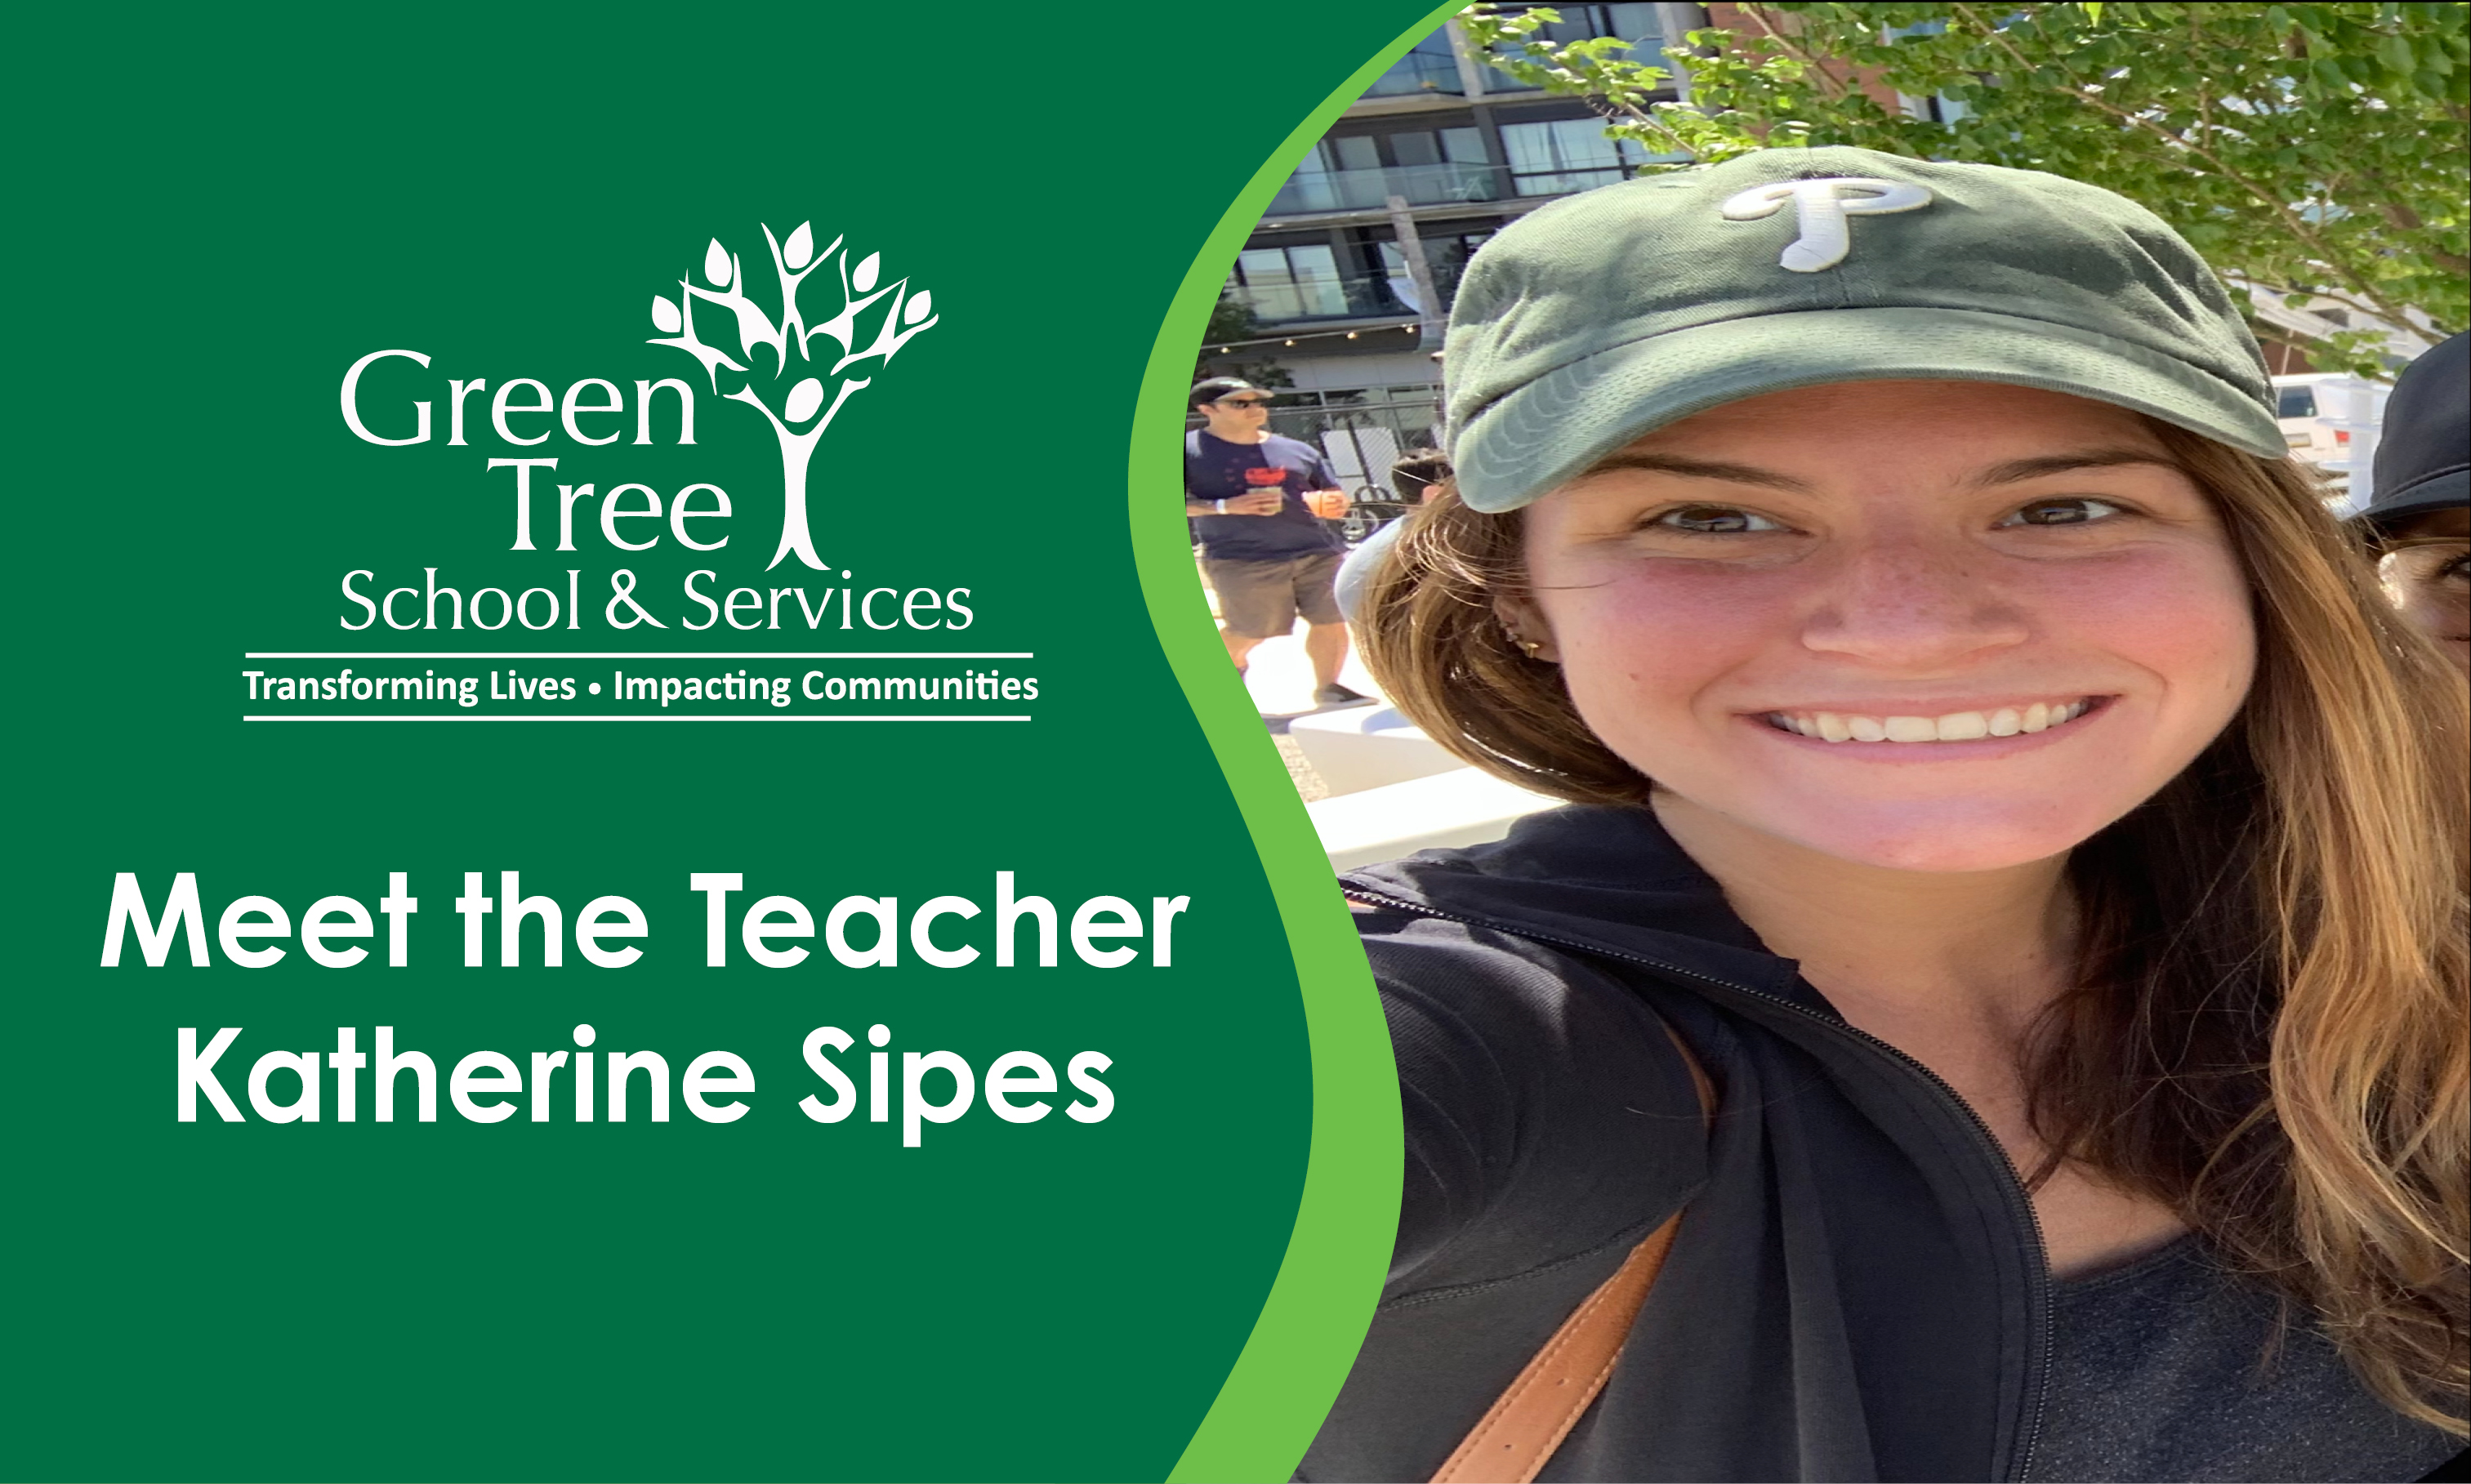 Meet the Teacher: Katherine Sipes